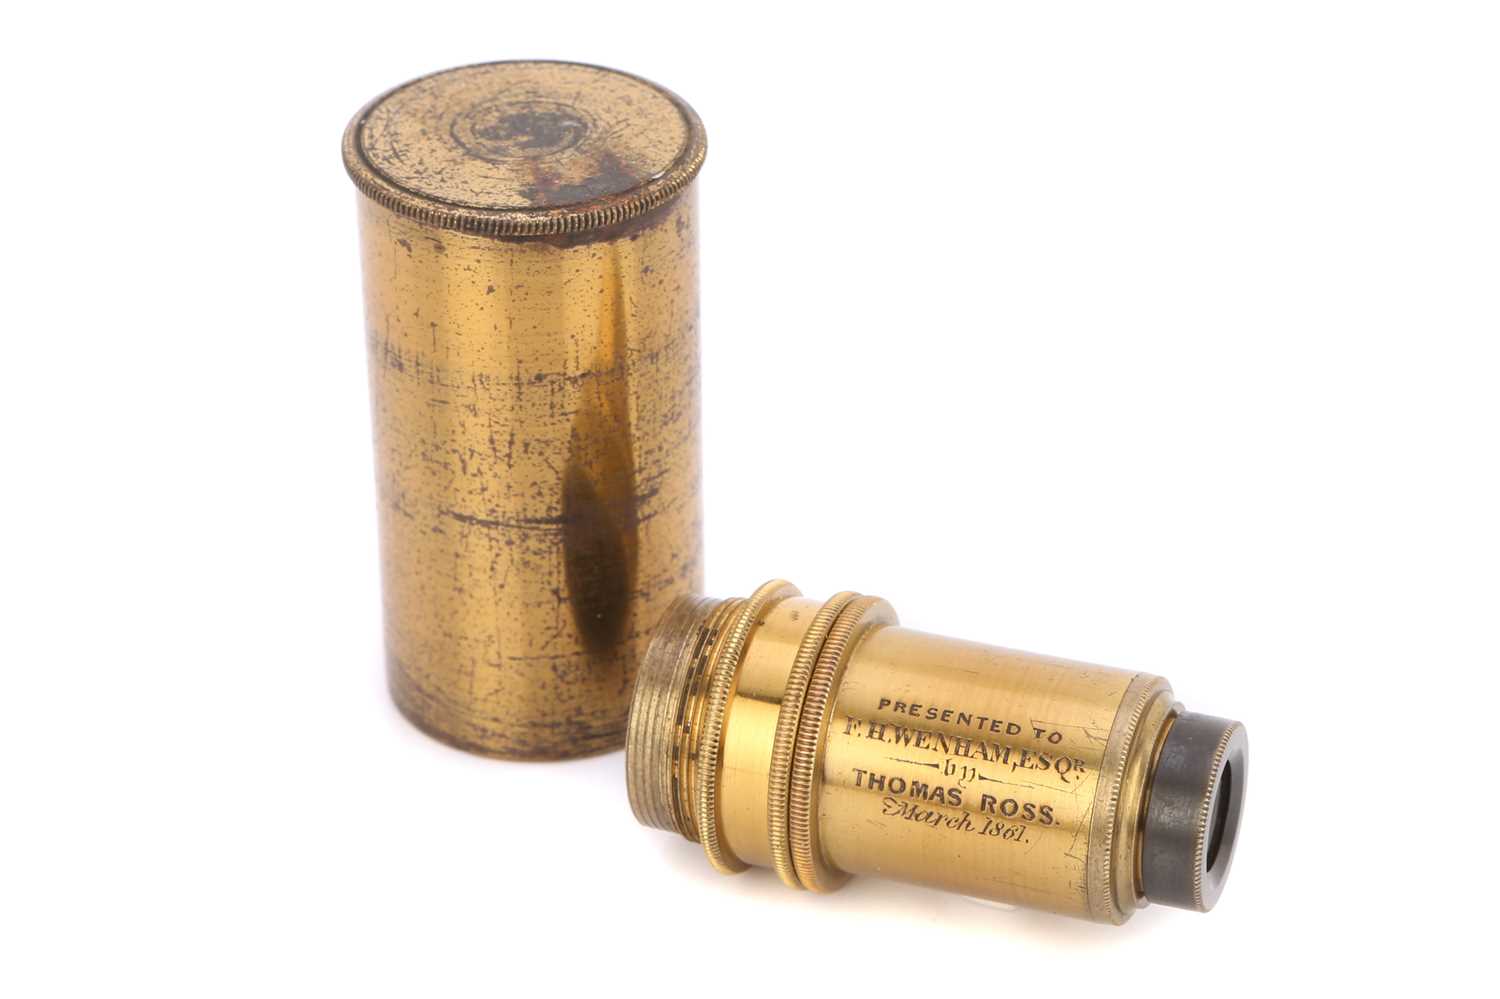 Lot 2 - A Presentation Microscope Objective From Thomas Ross to Francis Wenham, 1861